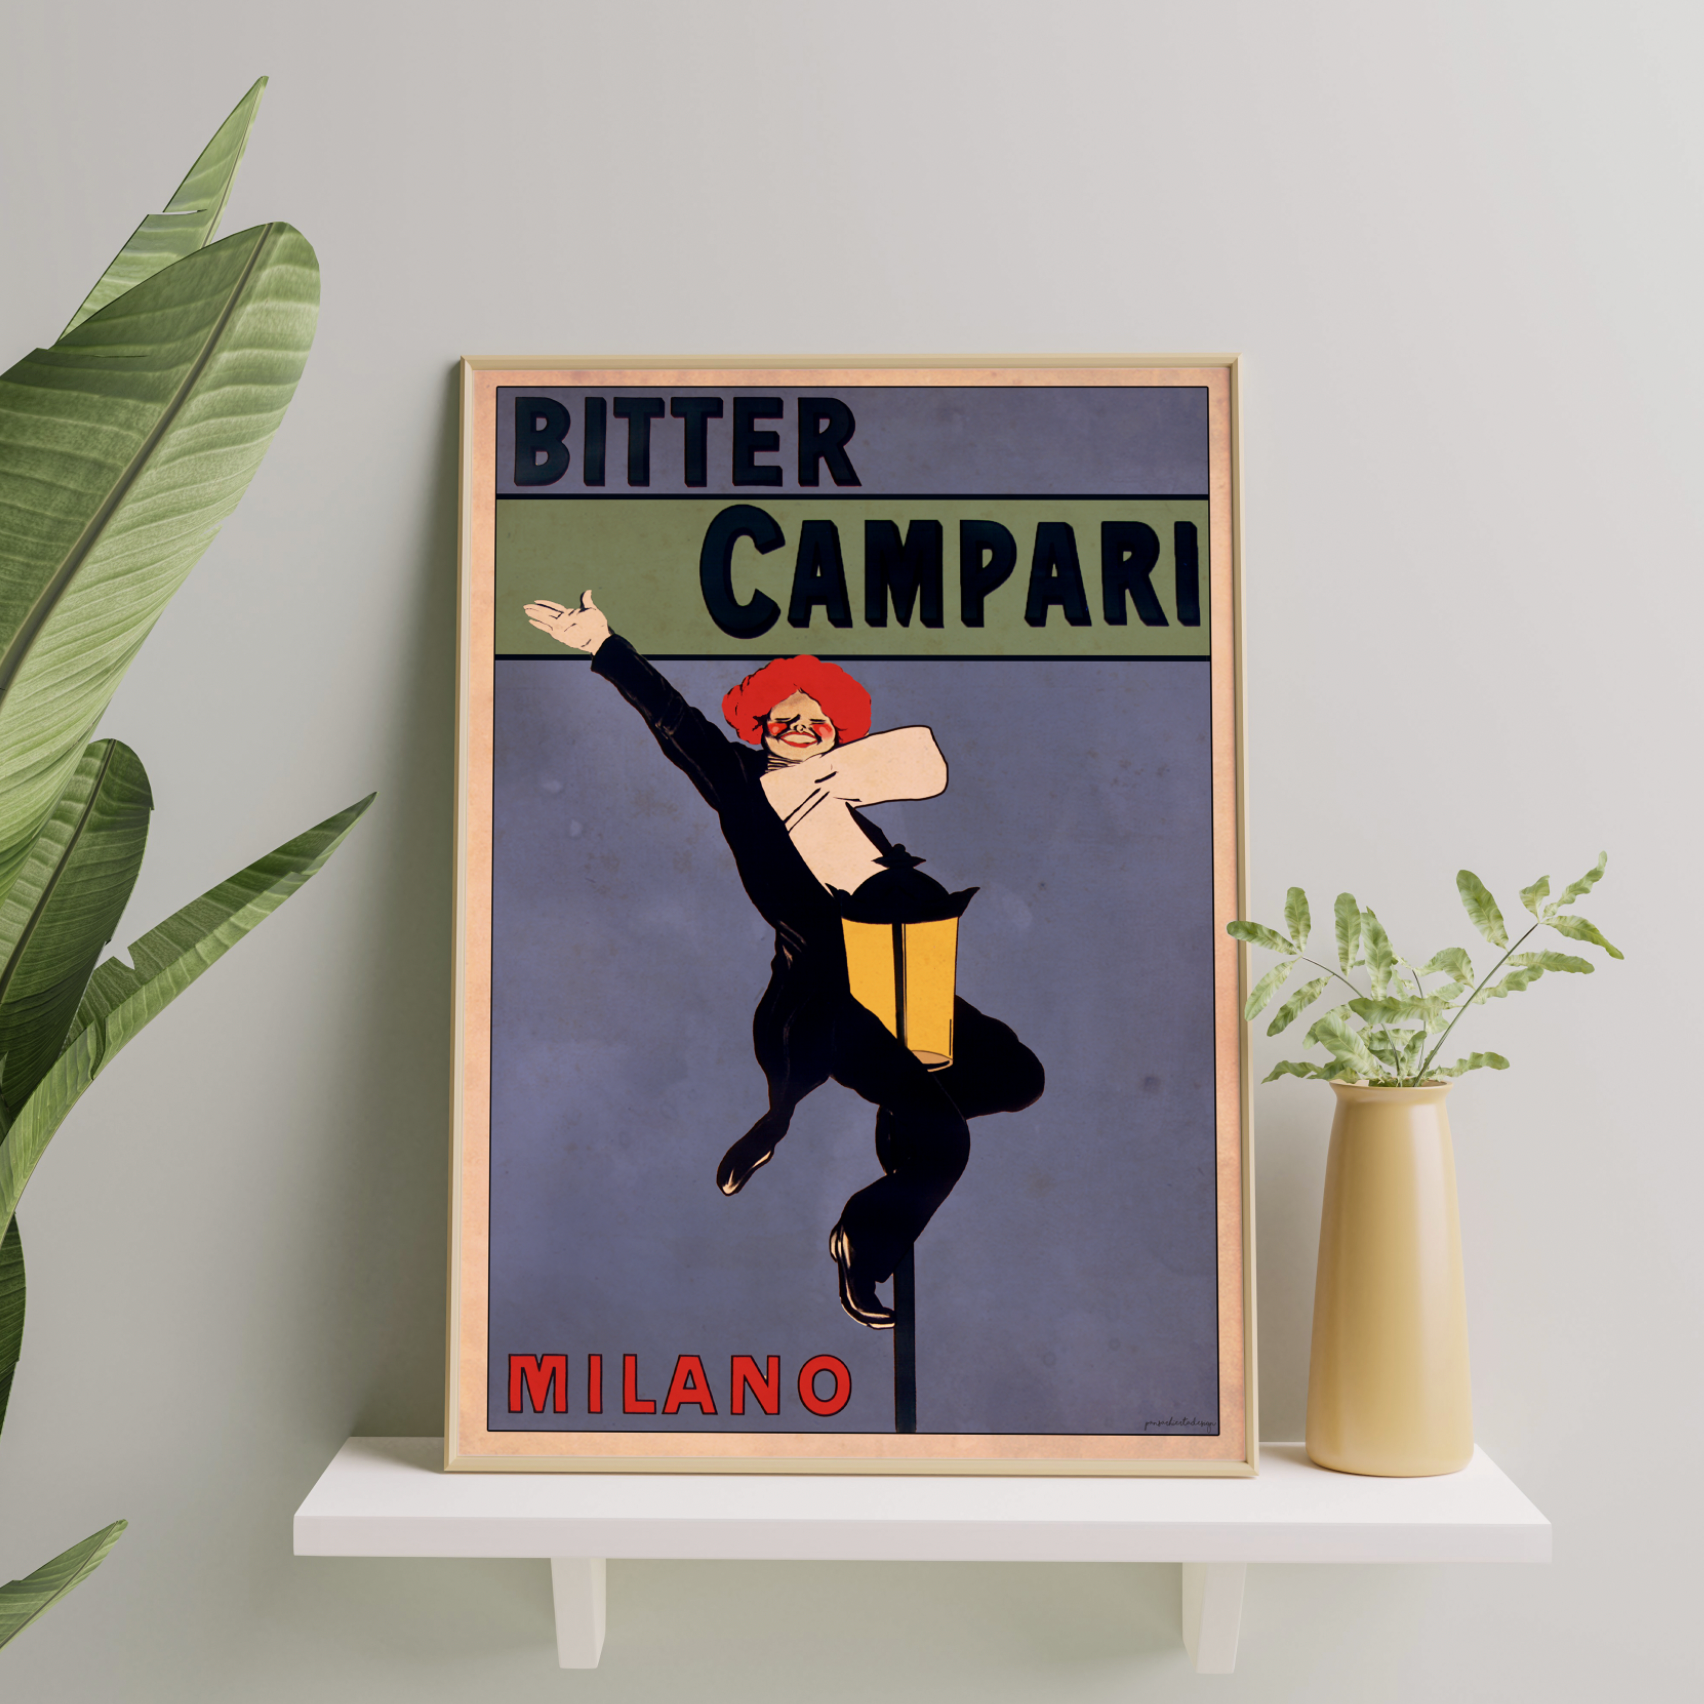 Bitter Campari Milano